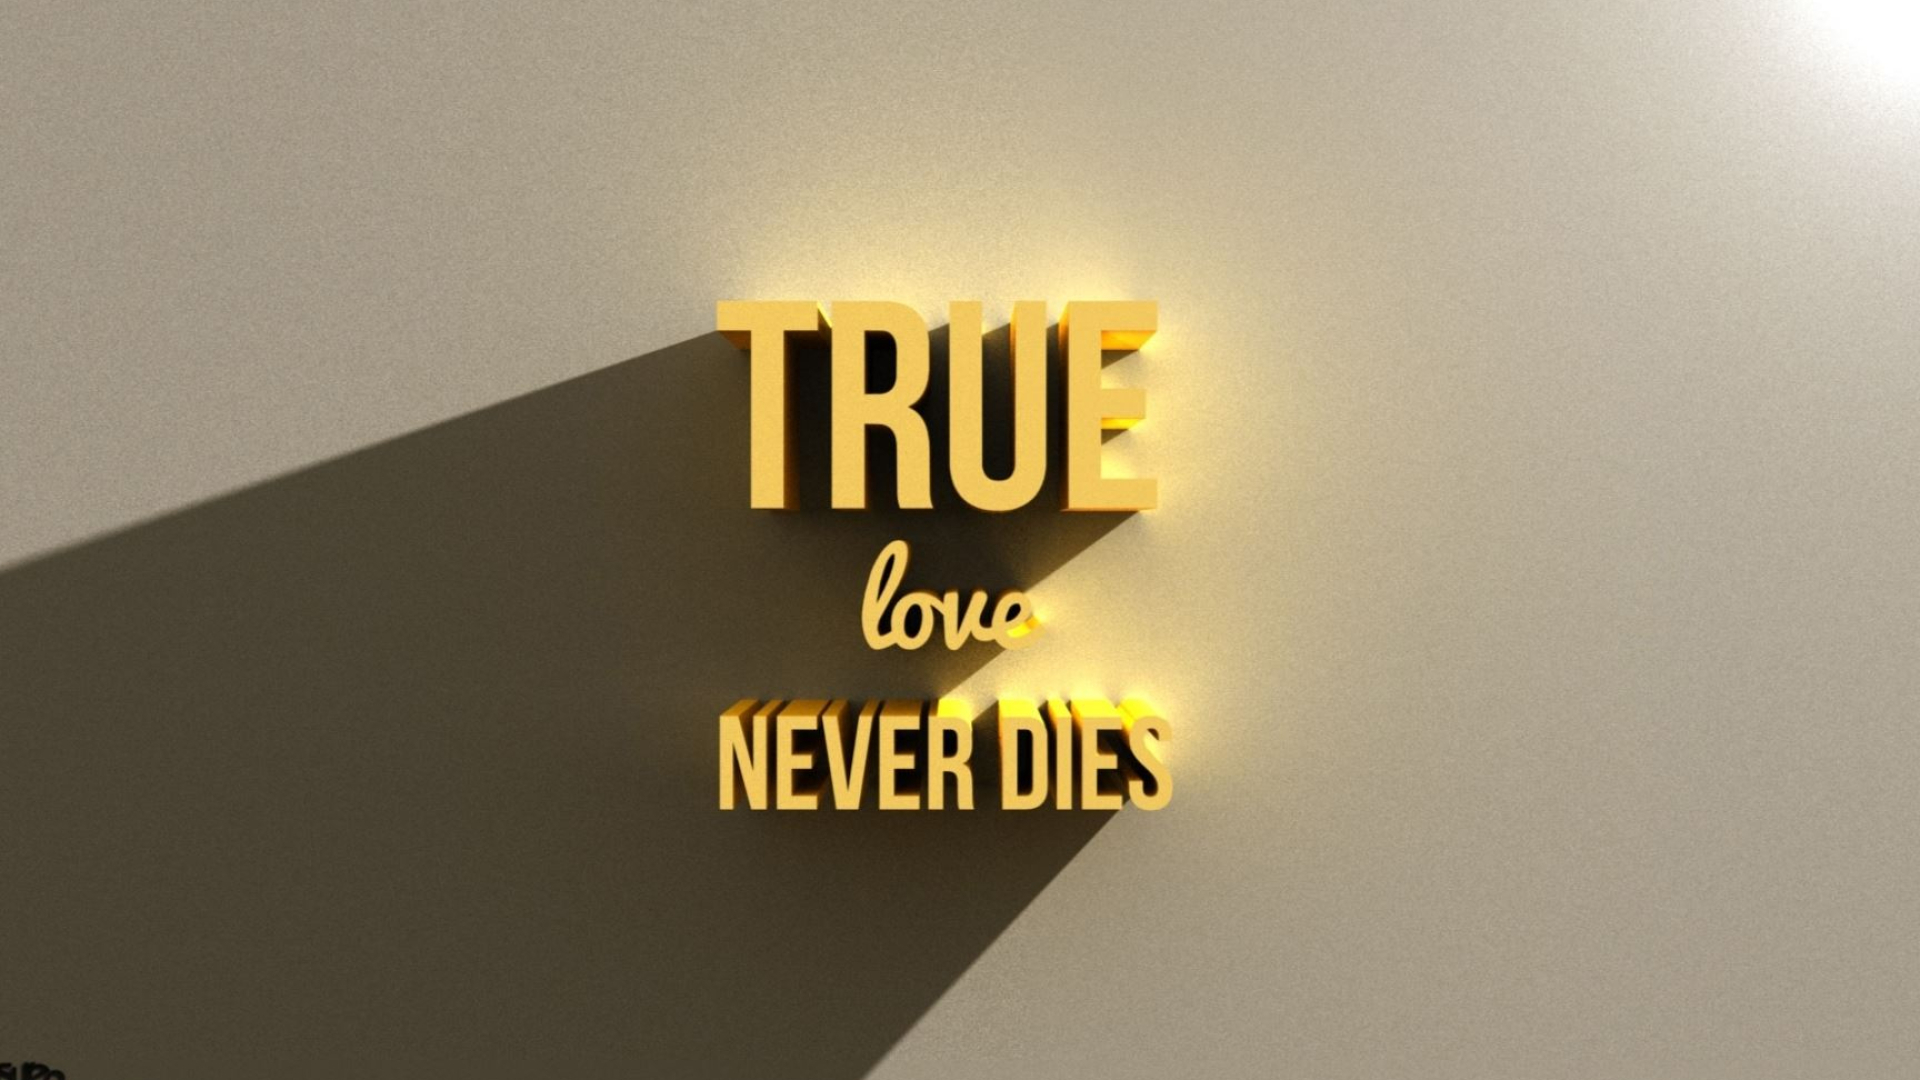 1920x1080 True love never dies MacBook Air Wallpaper Download